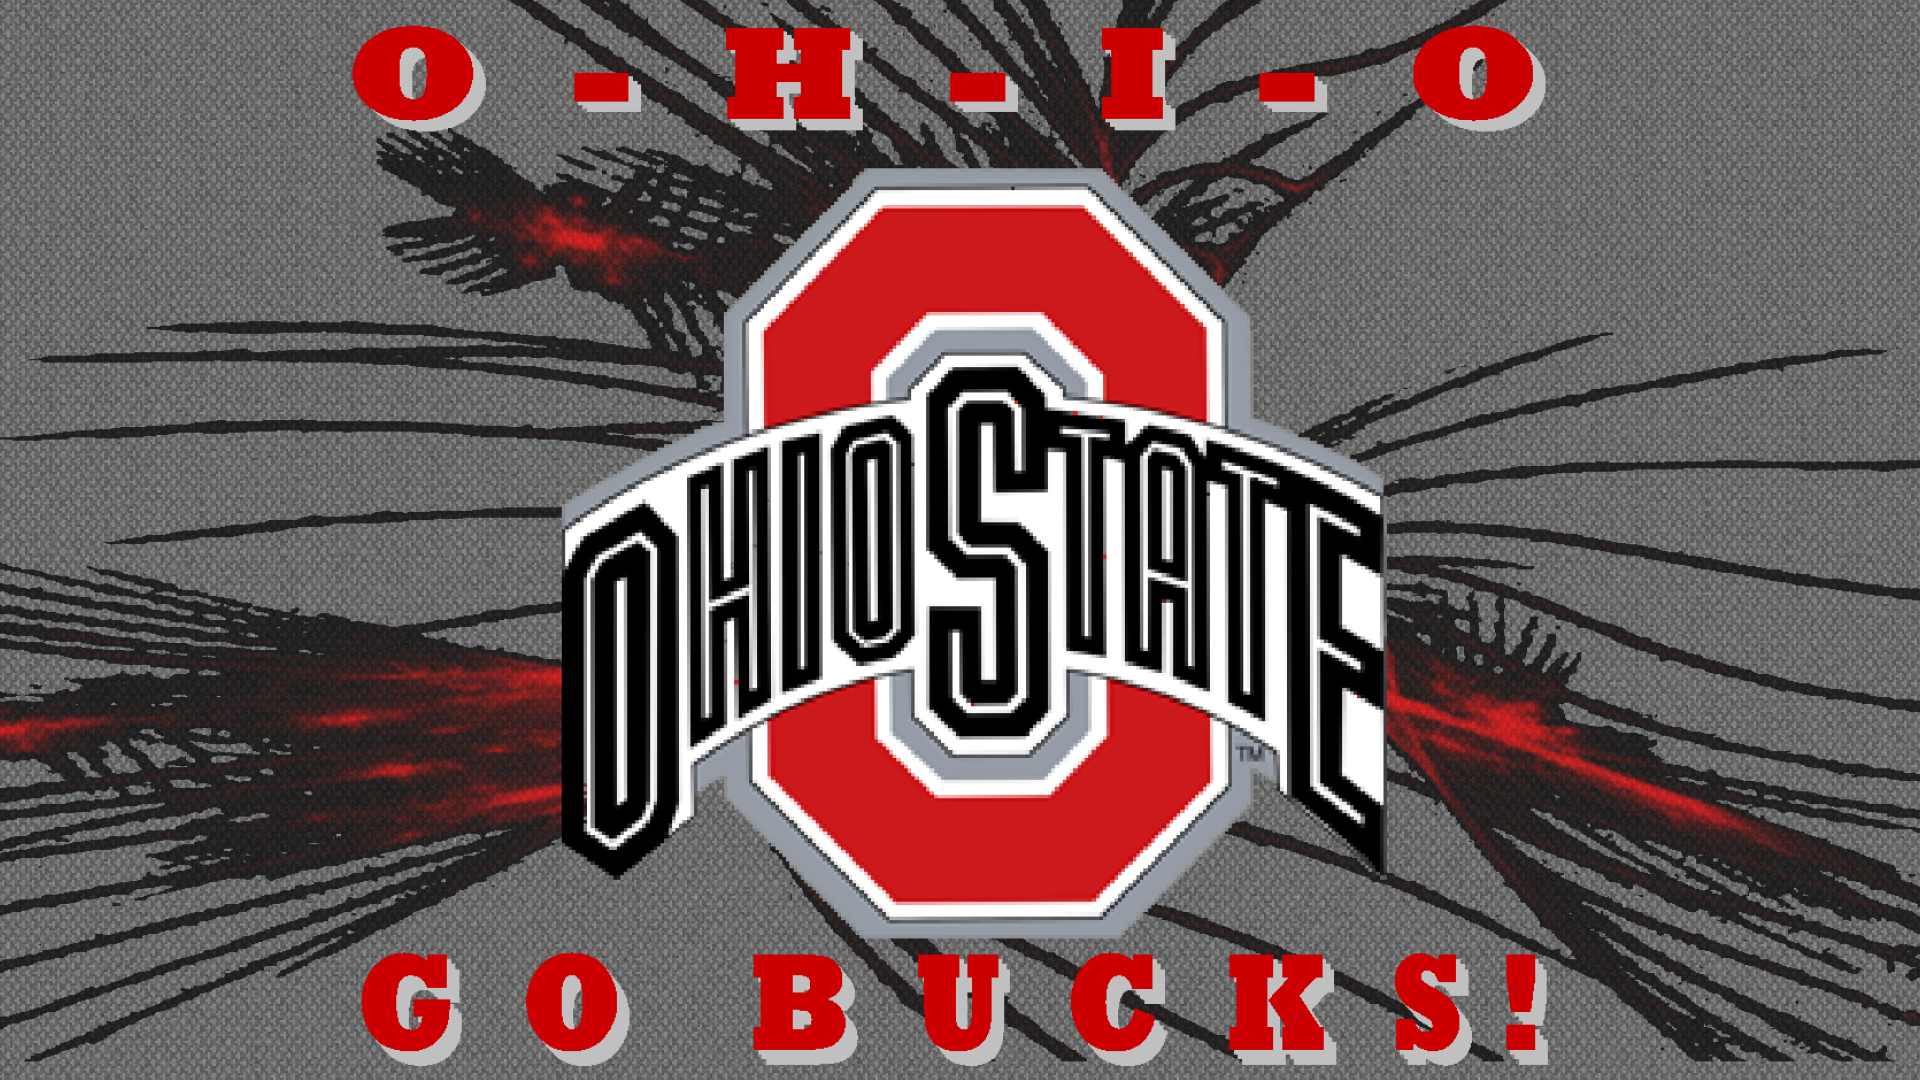 O-H-I-O GO BUCKS! - Ohio State University Basketball Wallpaper (26349630) - Fanpop1920 x 1080